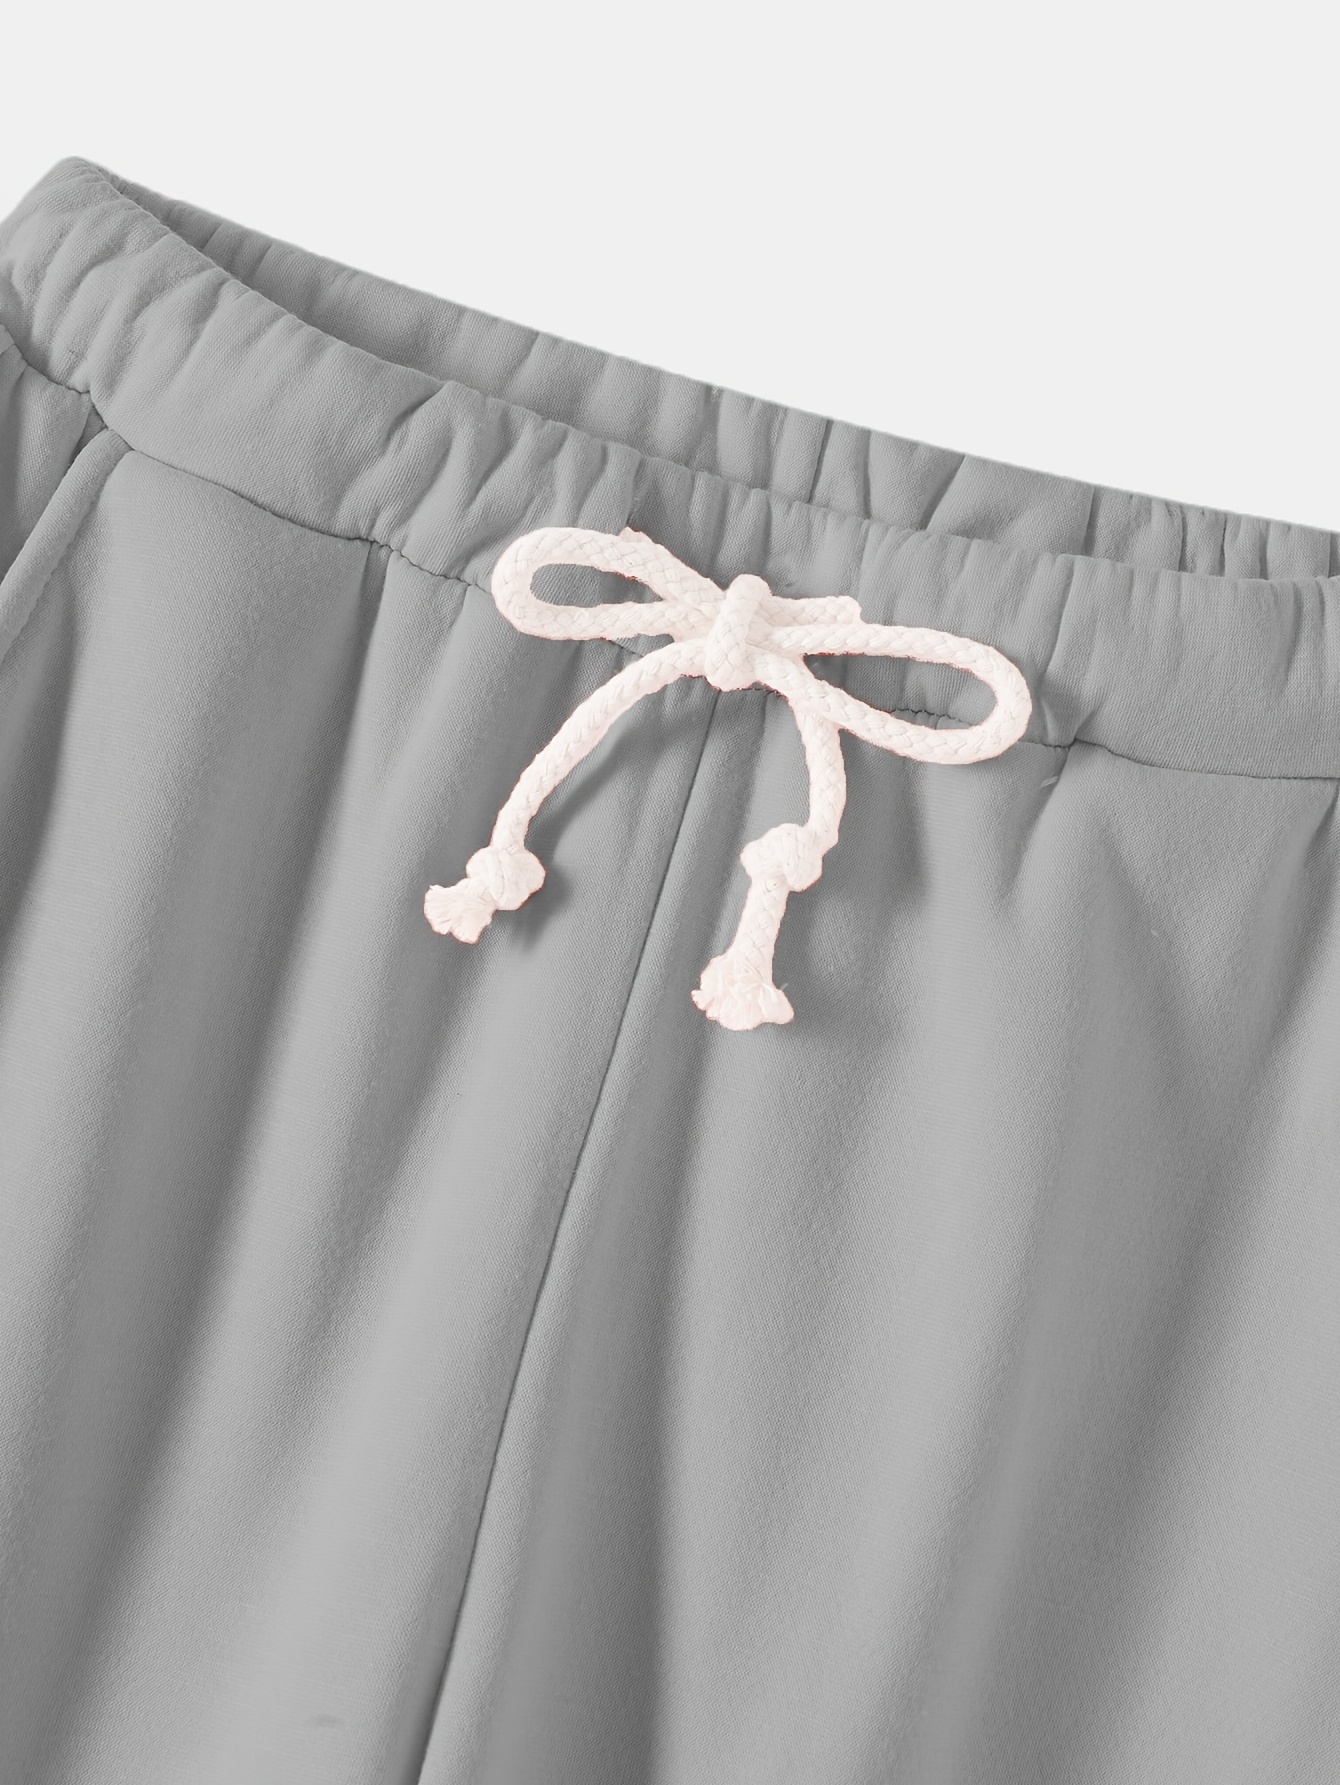 solid drawstring thermal sweatpants versatile loose comfy jogger pants womens clothing details 1